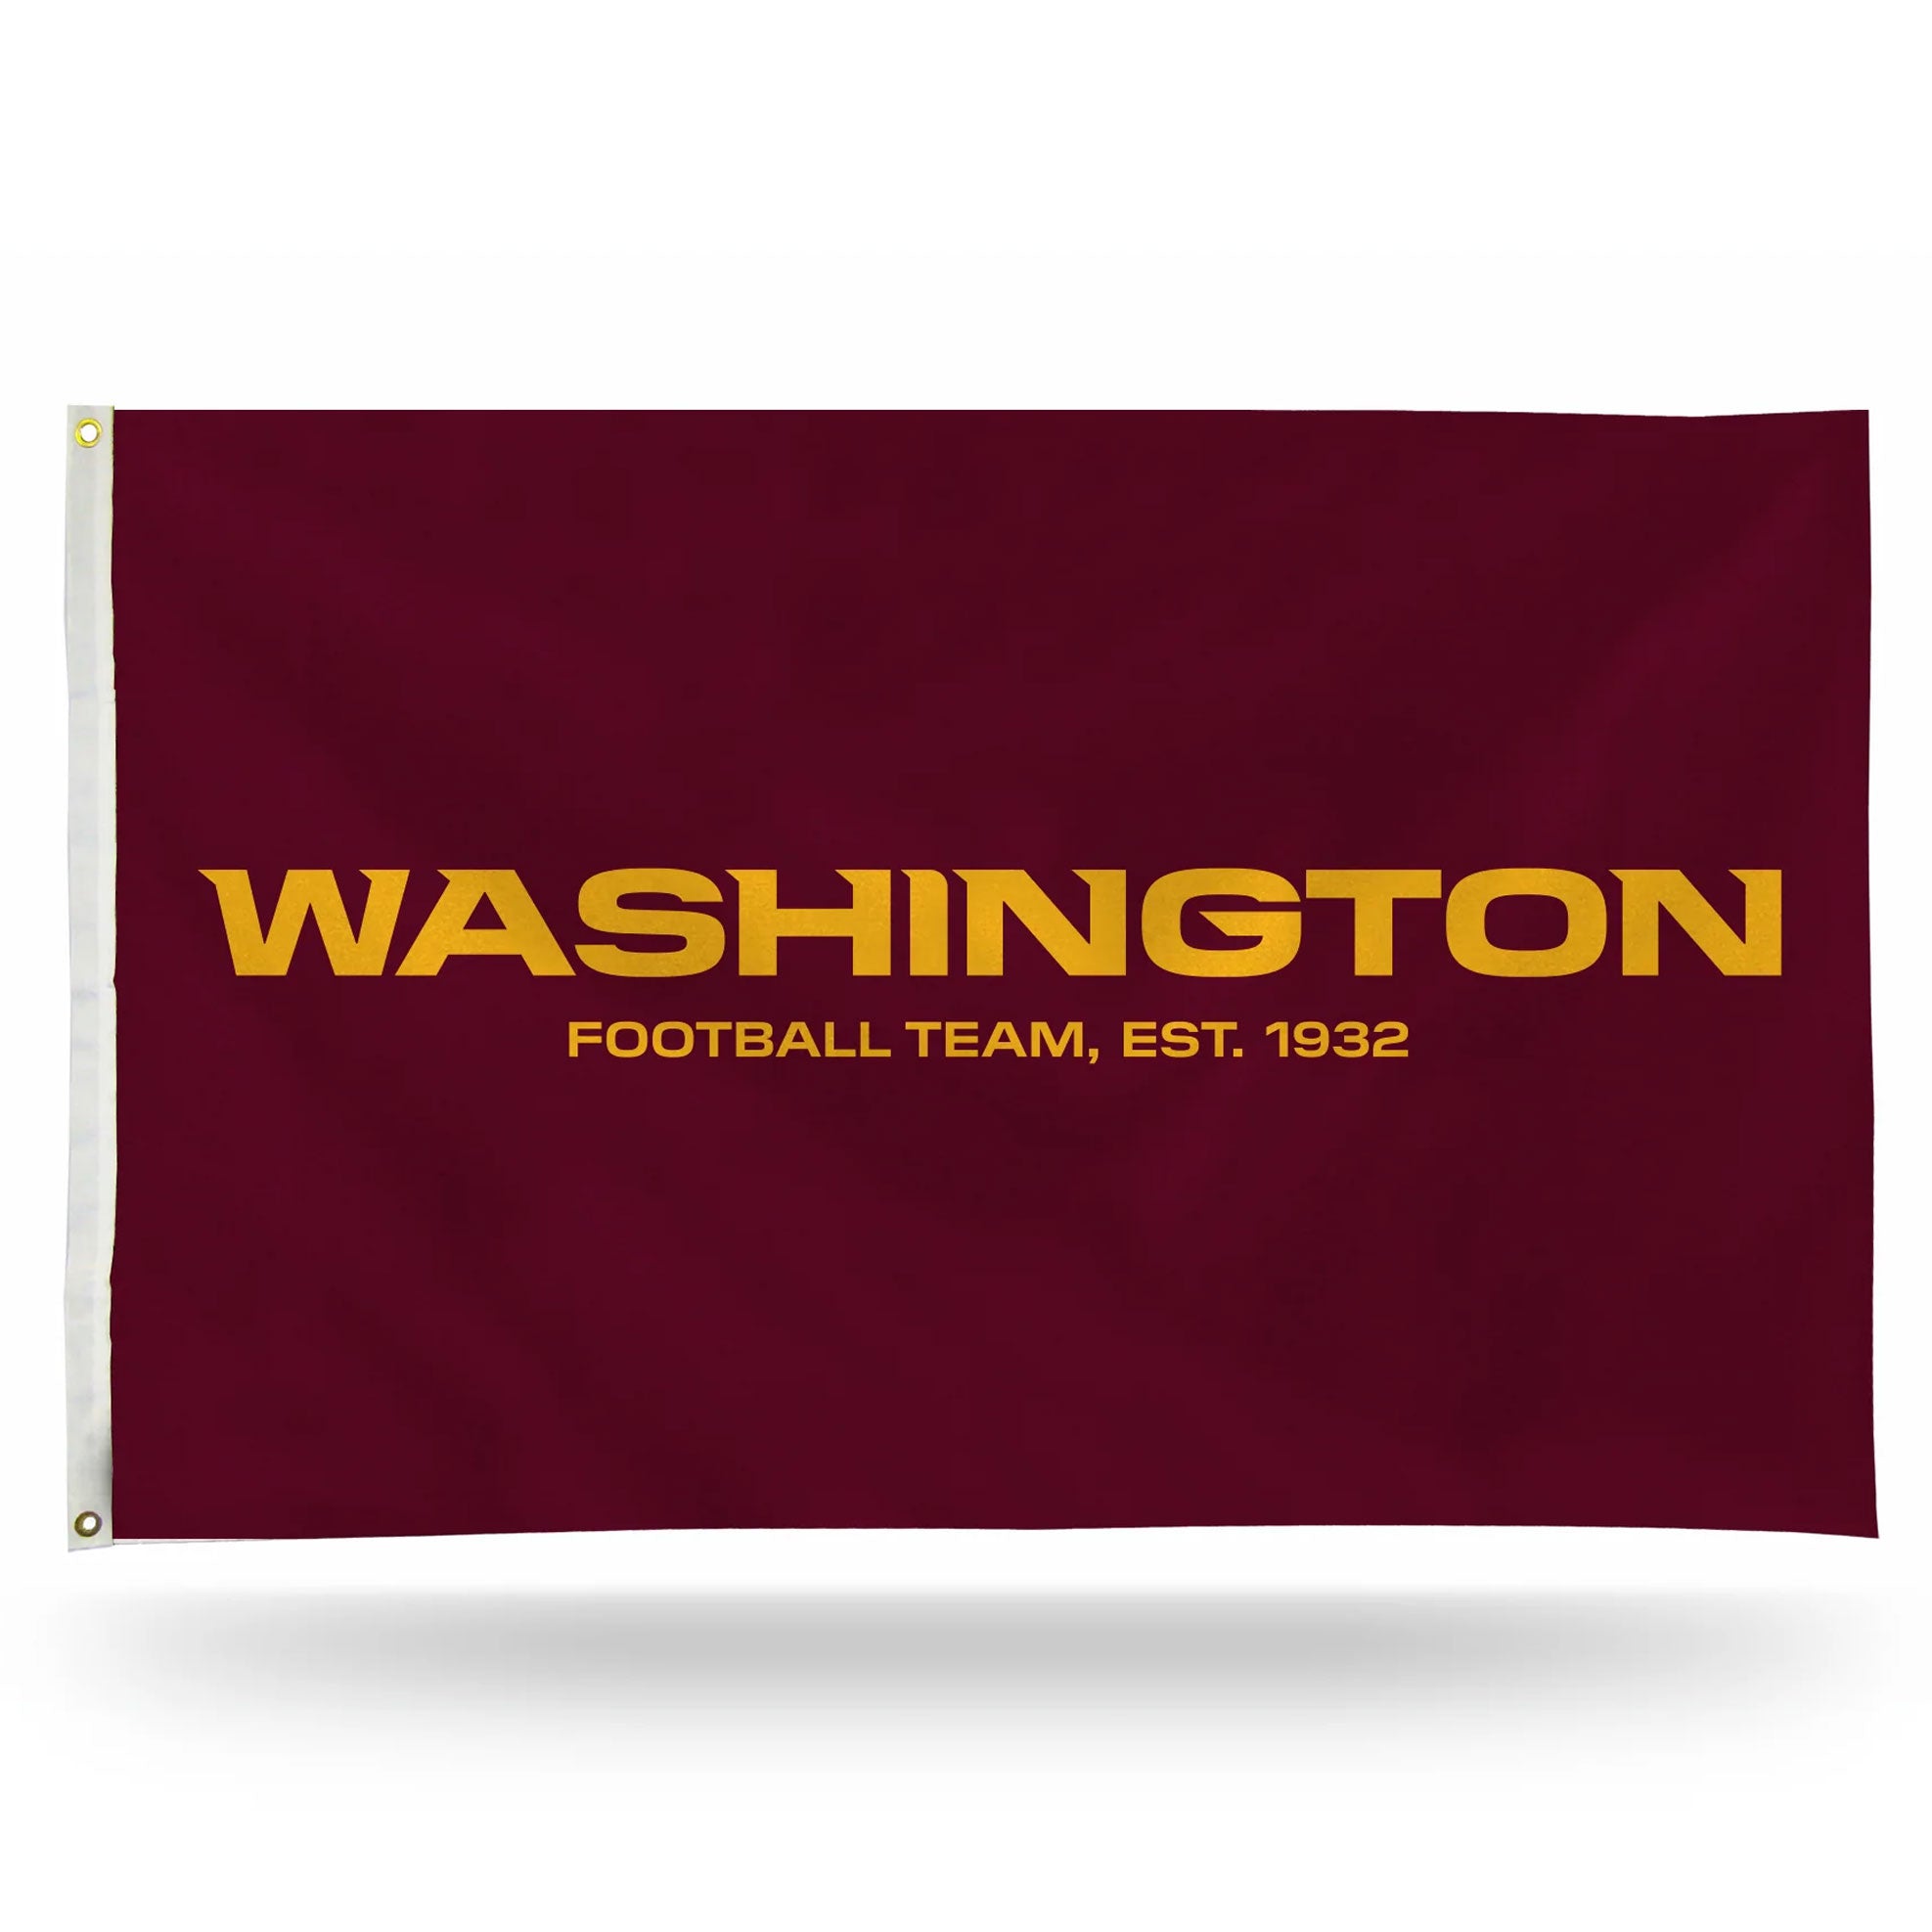 Redskins FLAG 3X5 Washington Banner American Football New Free USA Shipping